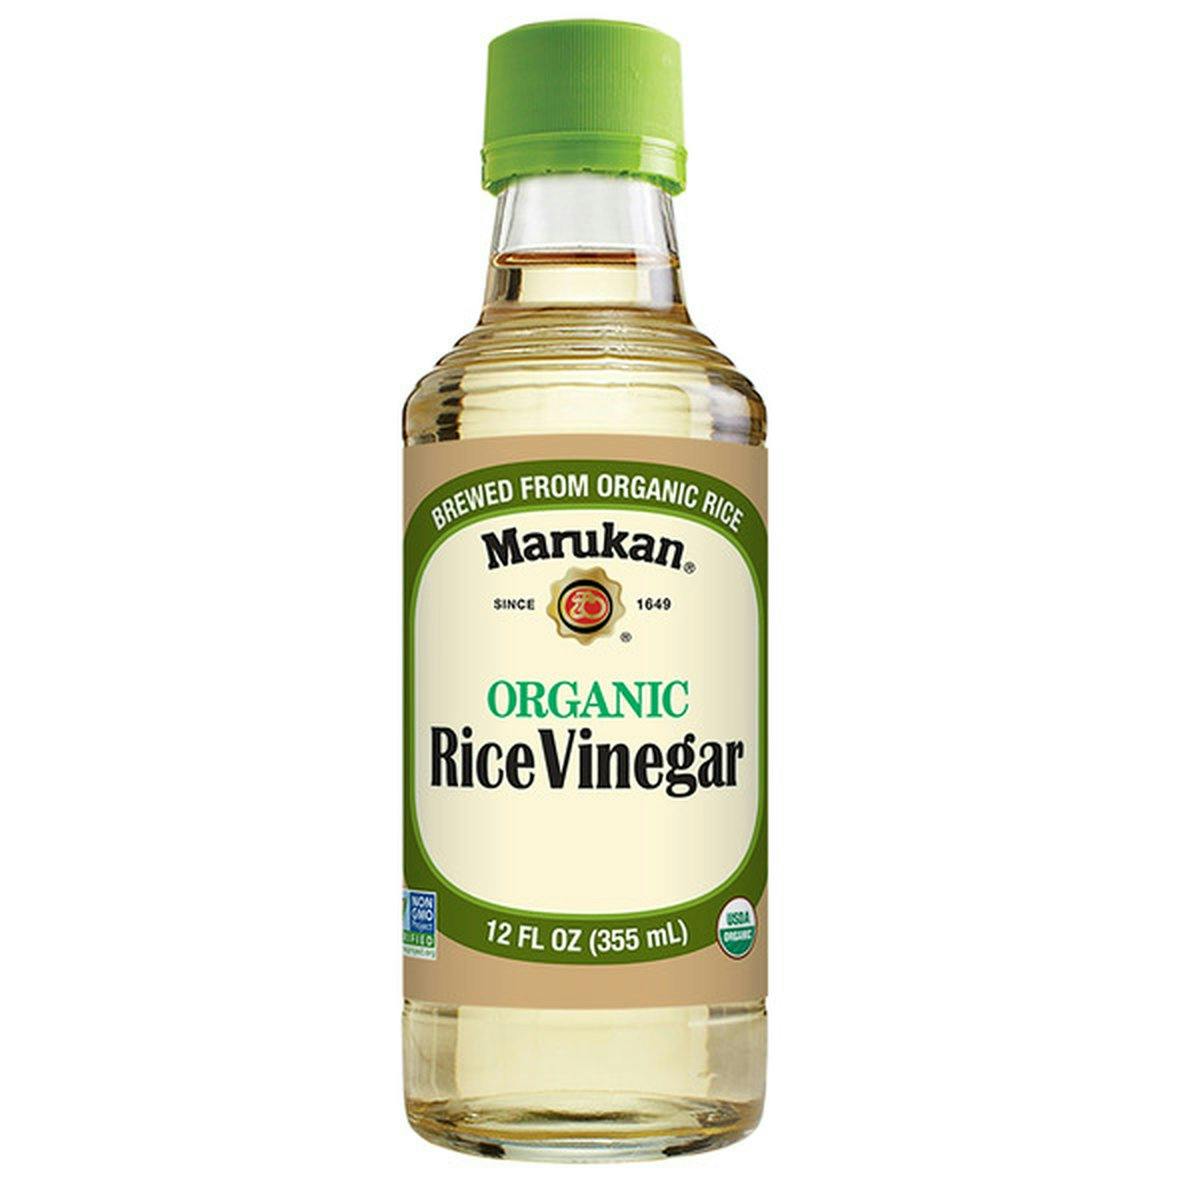 vinegar (I used sherry vinegar)